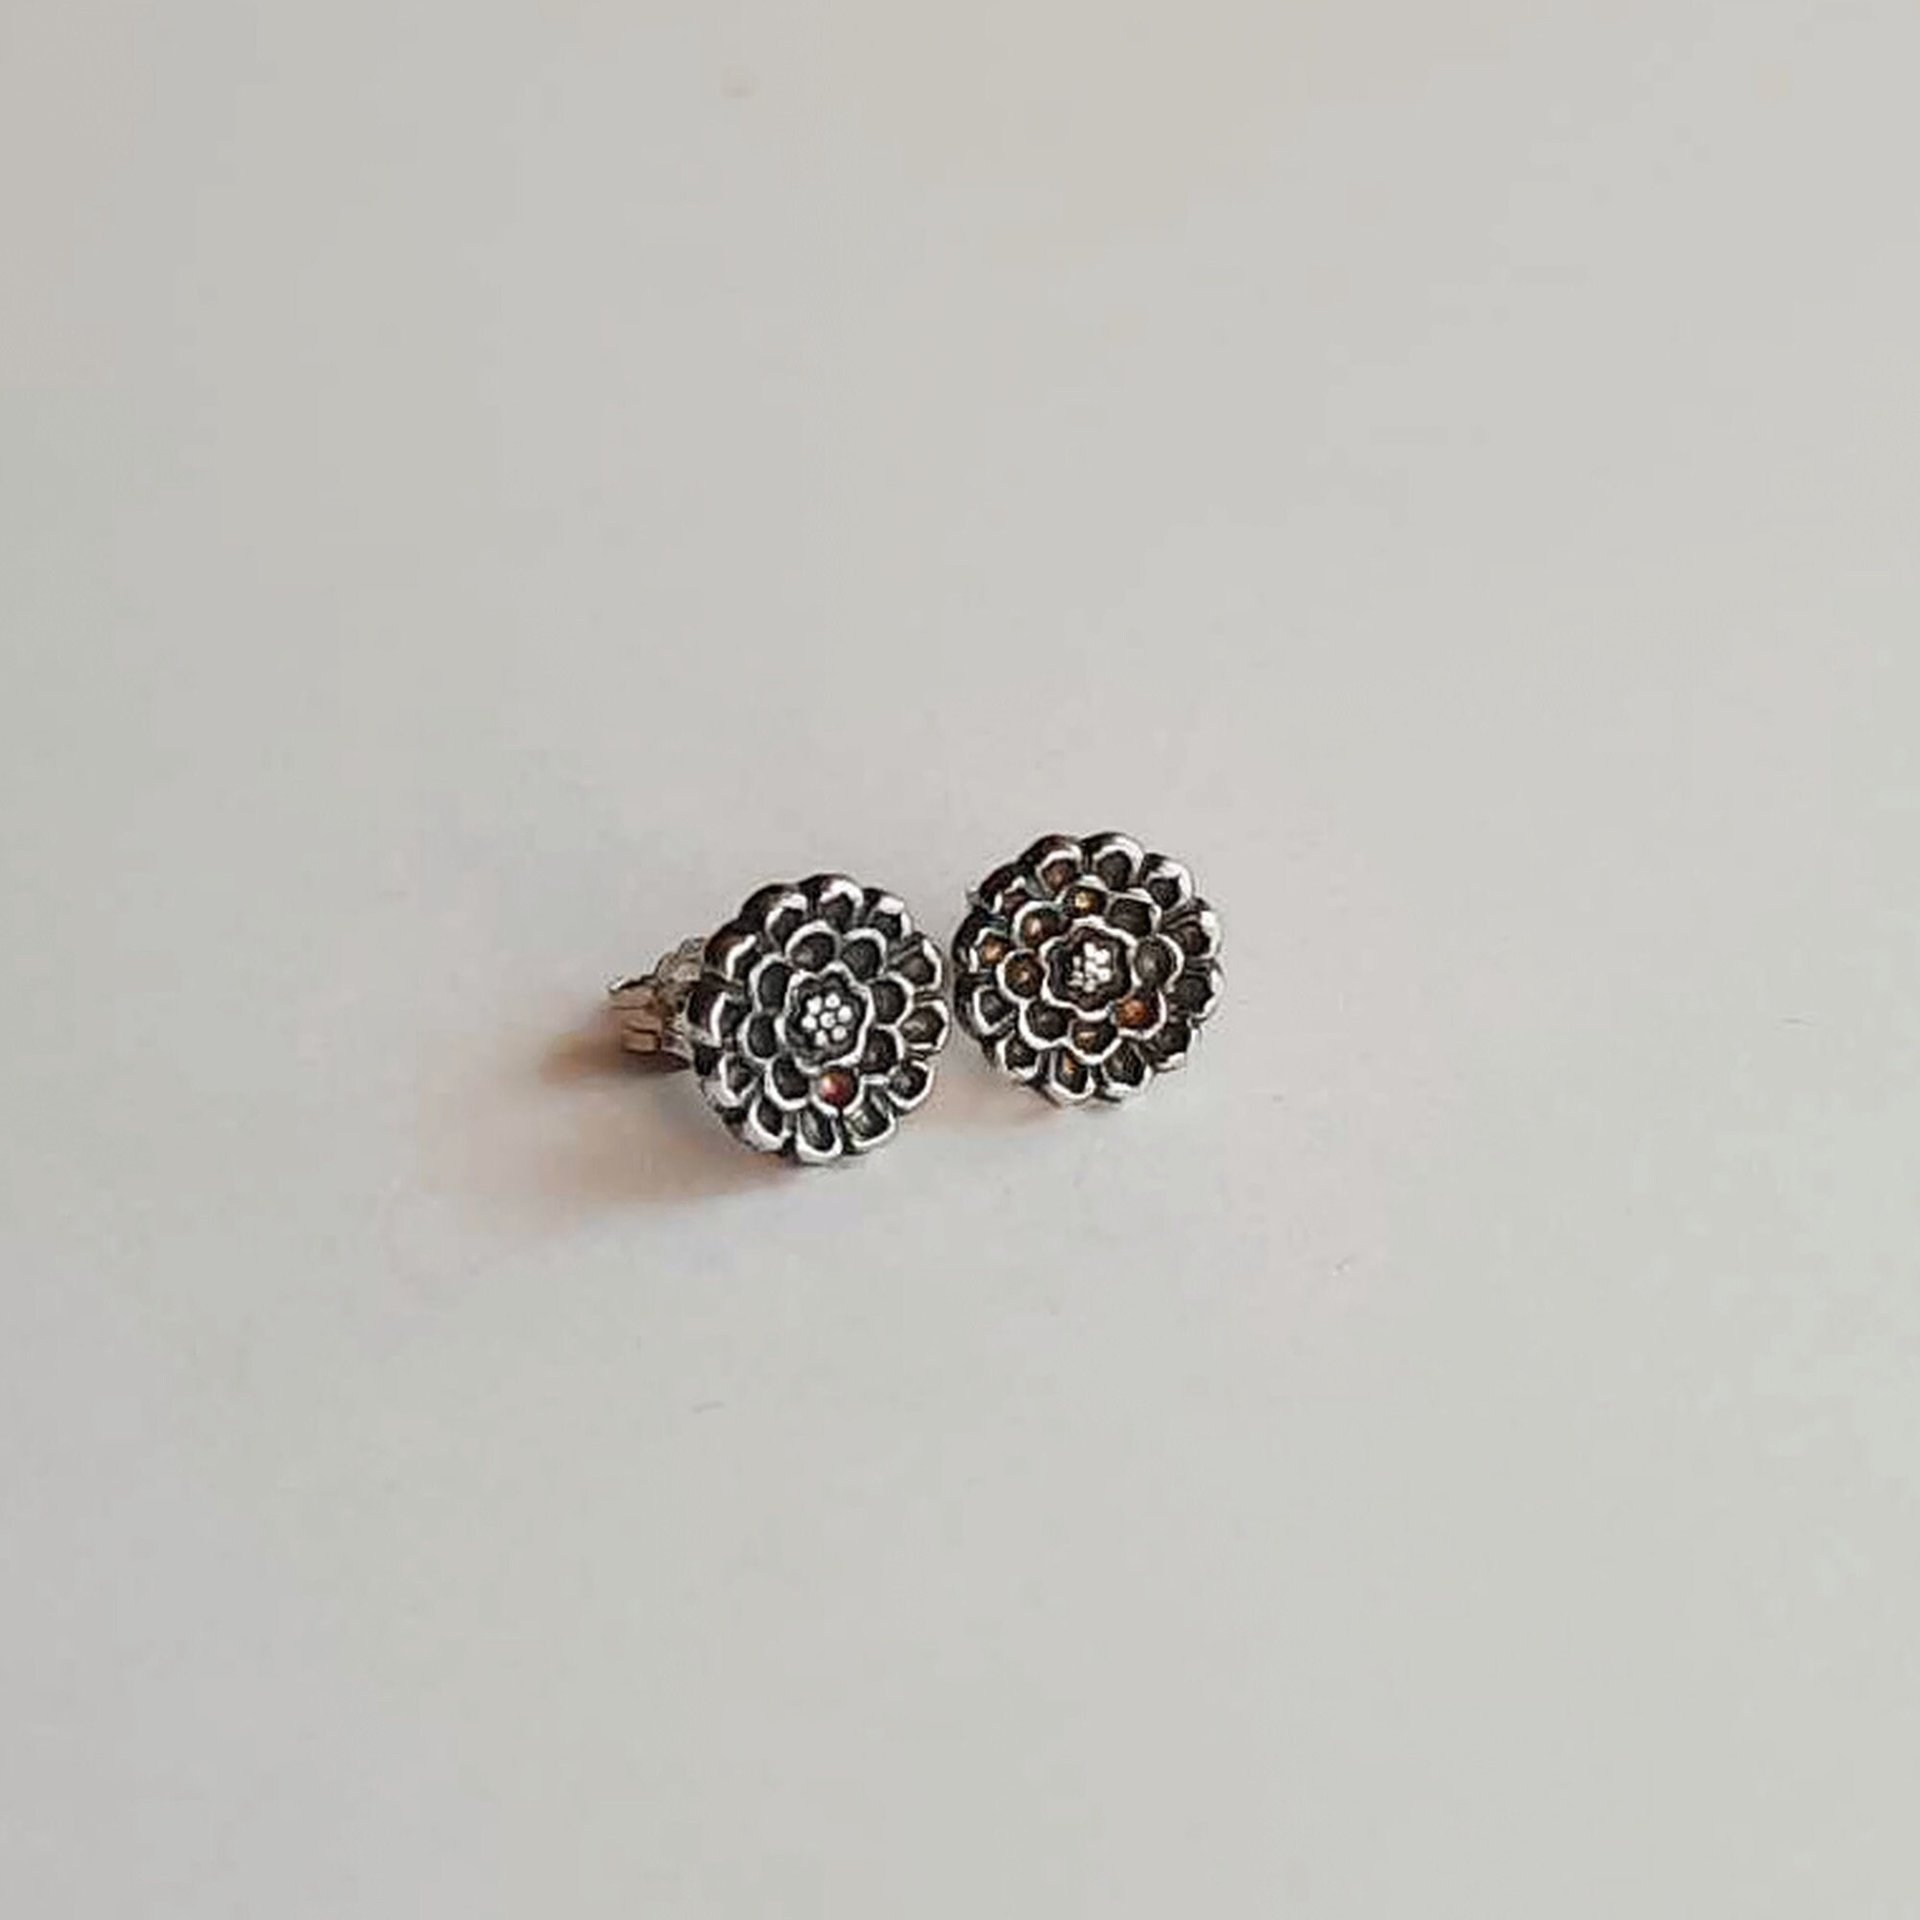 Oxidised Silver Dahlia Flower Stud Earrings - Handmade by The Tiny Tree Frog Jewellery